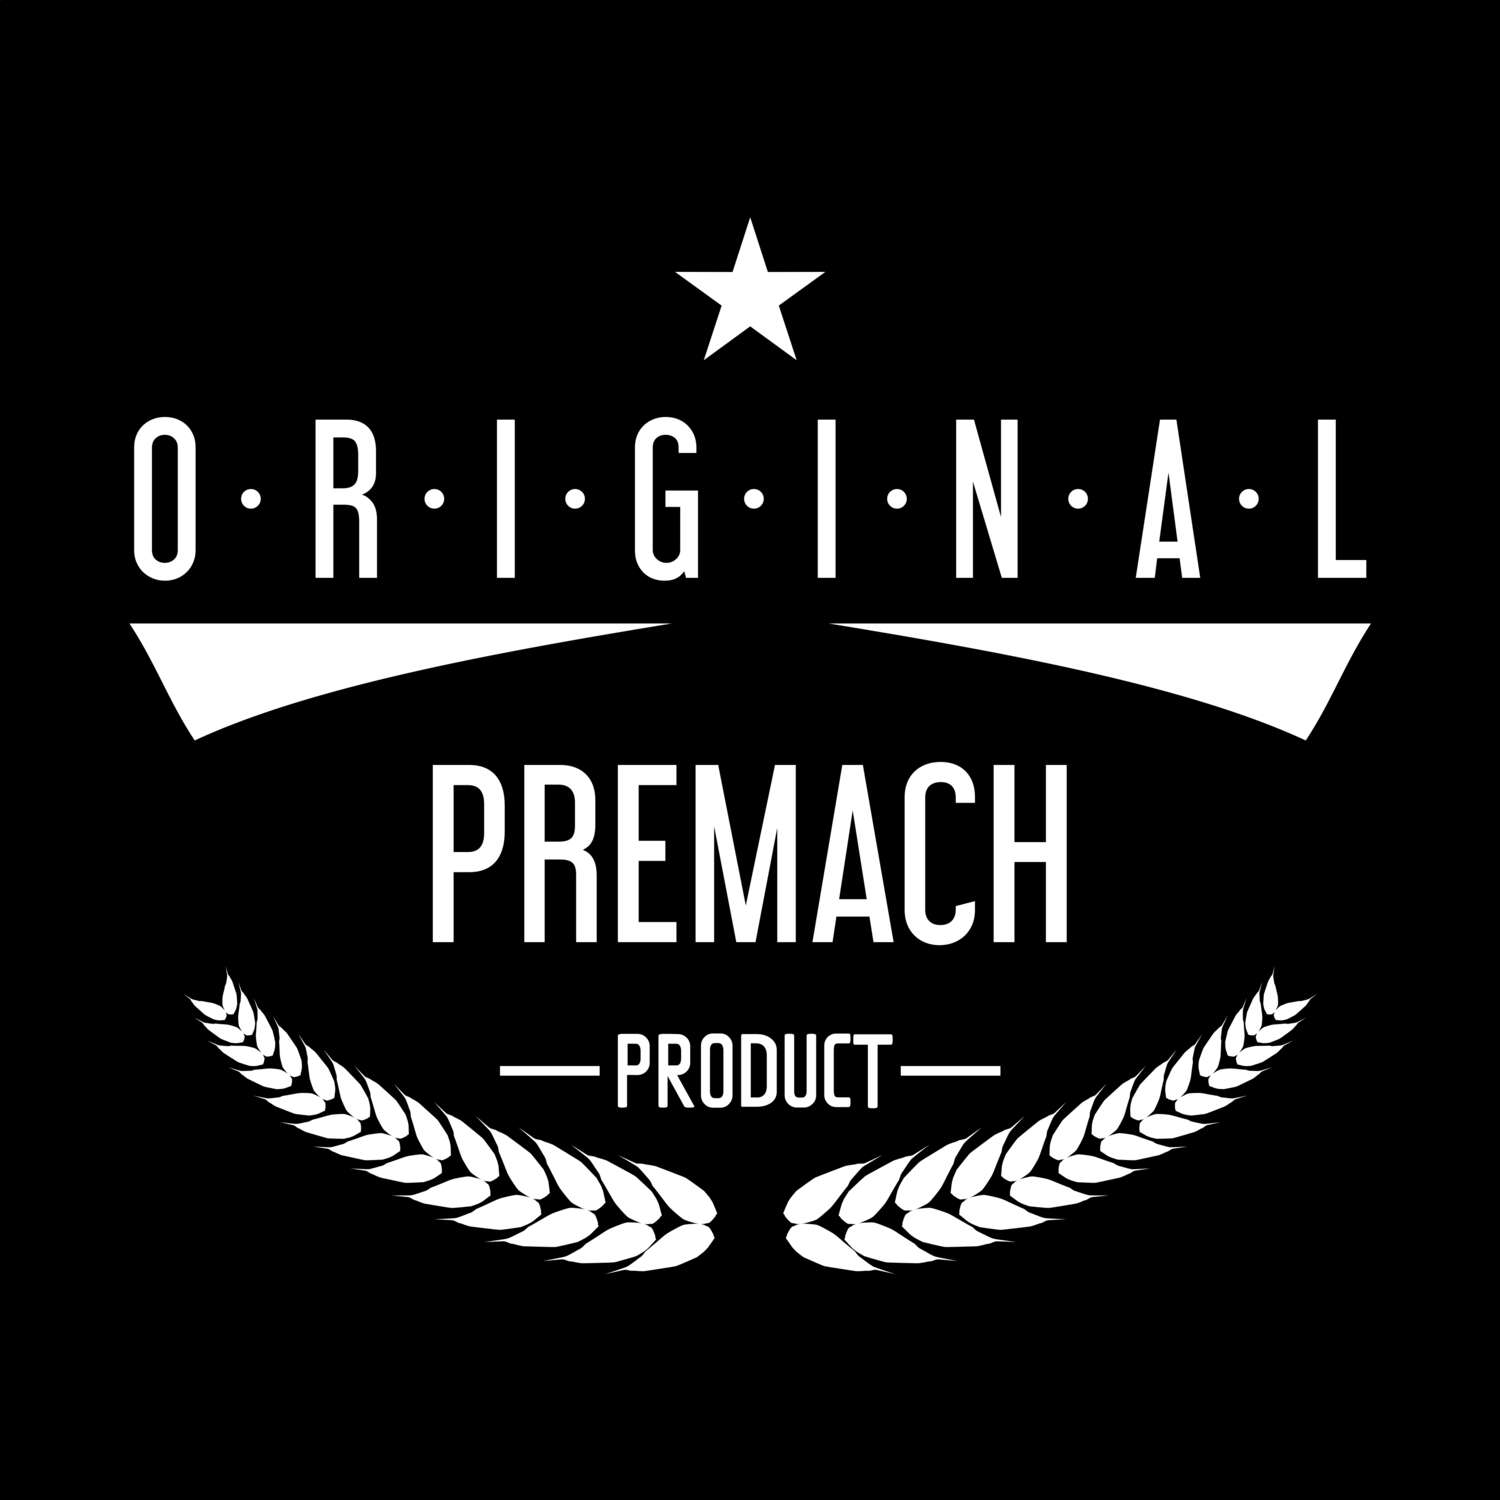 Premach T-Shirt »Original Product«